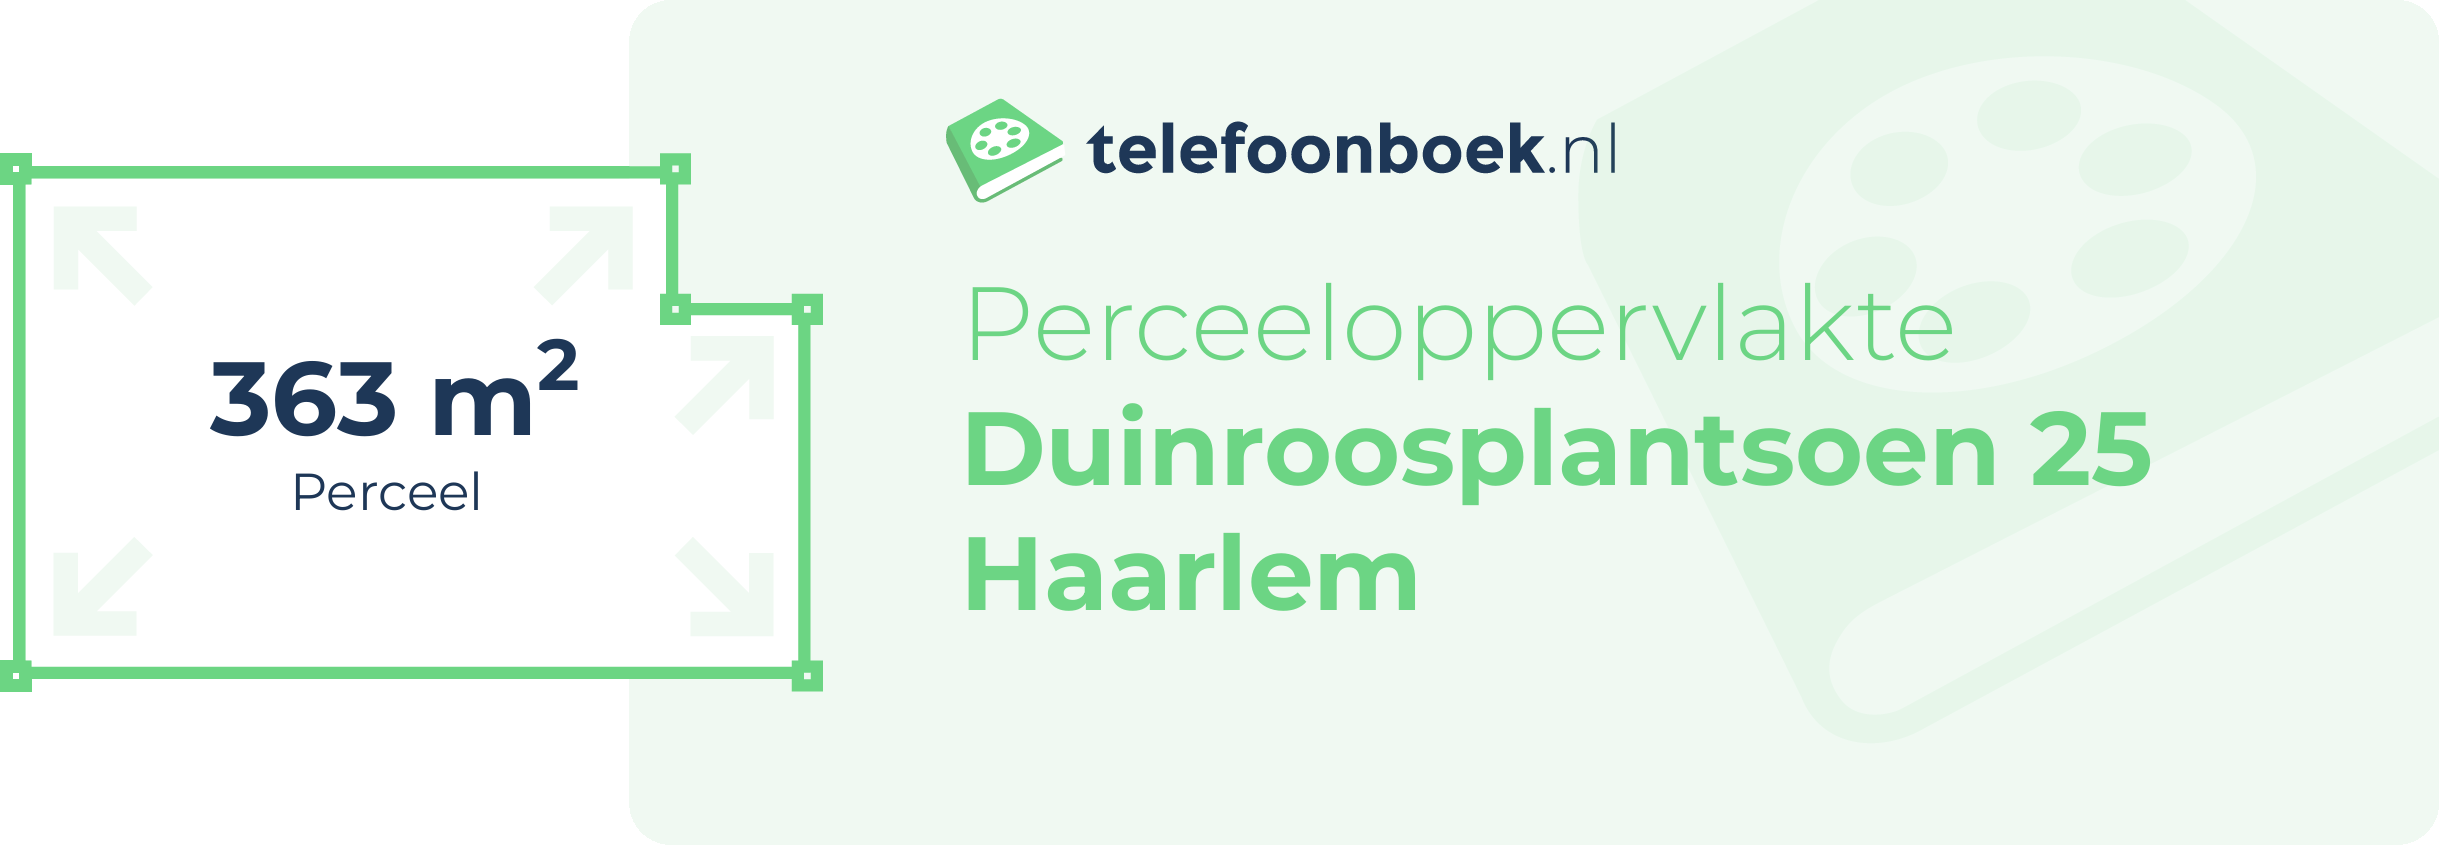 Perceeloppervlakte Duinroosplantsoen 25 Haarlem